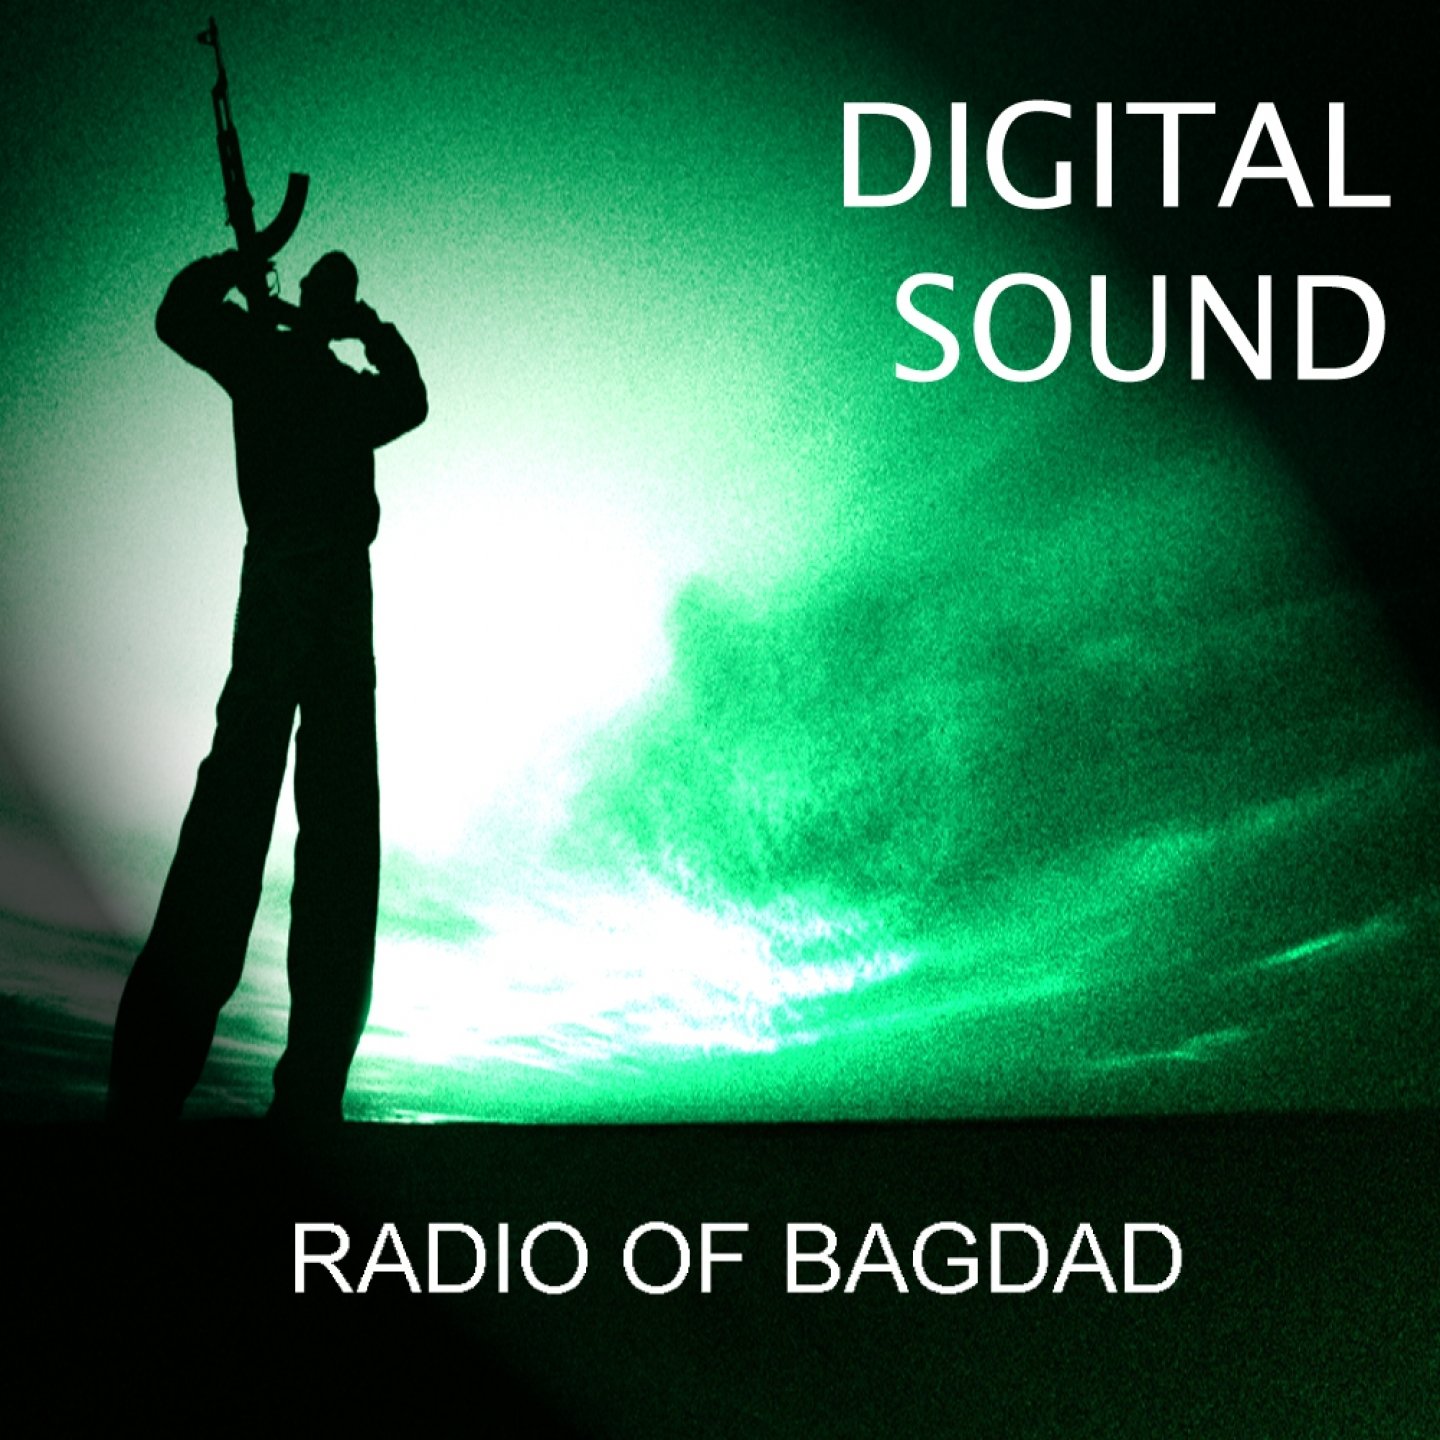 Digital Sound. David Kane - Club Sound (Radio Edit). The best in the World Radio Sound. The best in the World Radio Sound Lyrics. Звук ласт